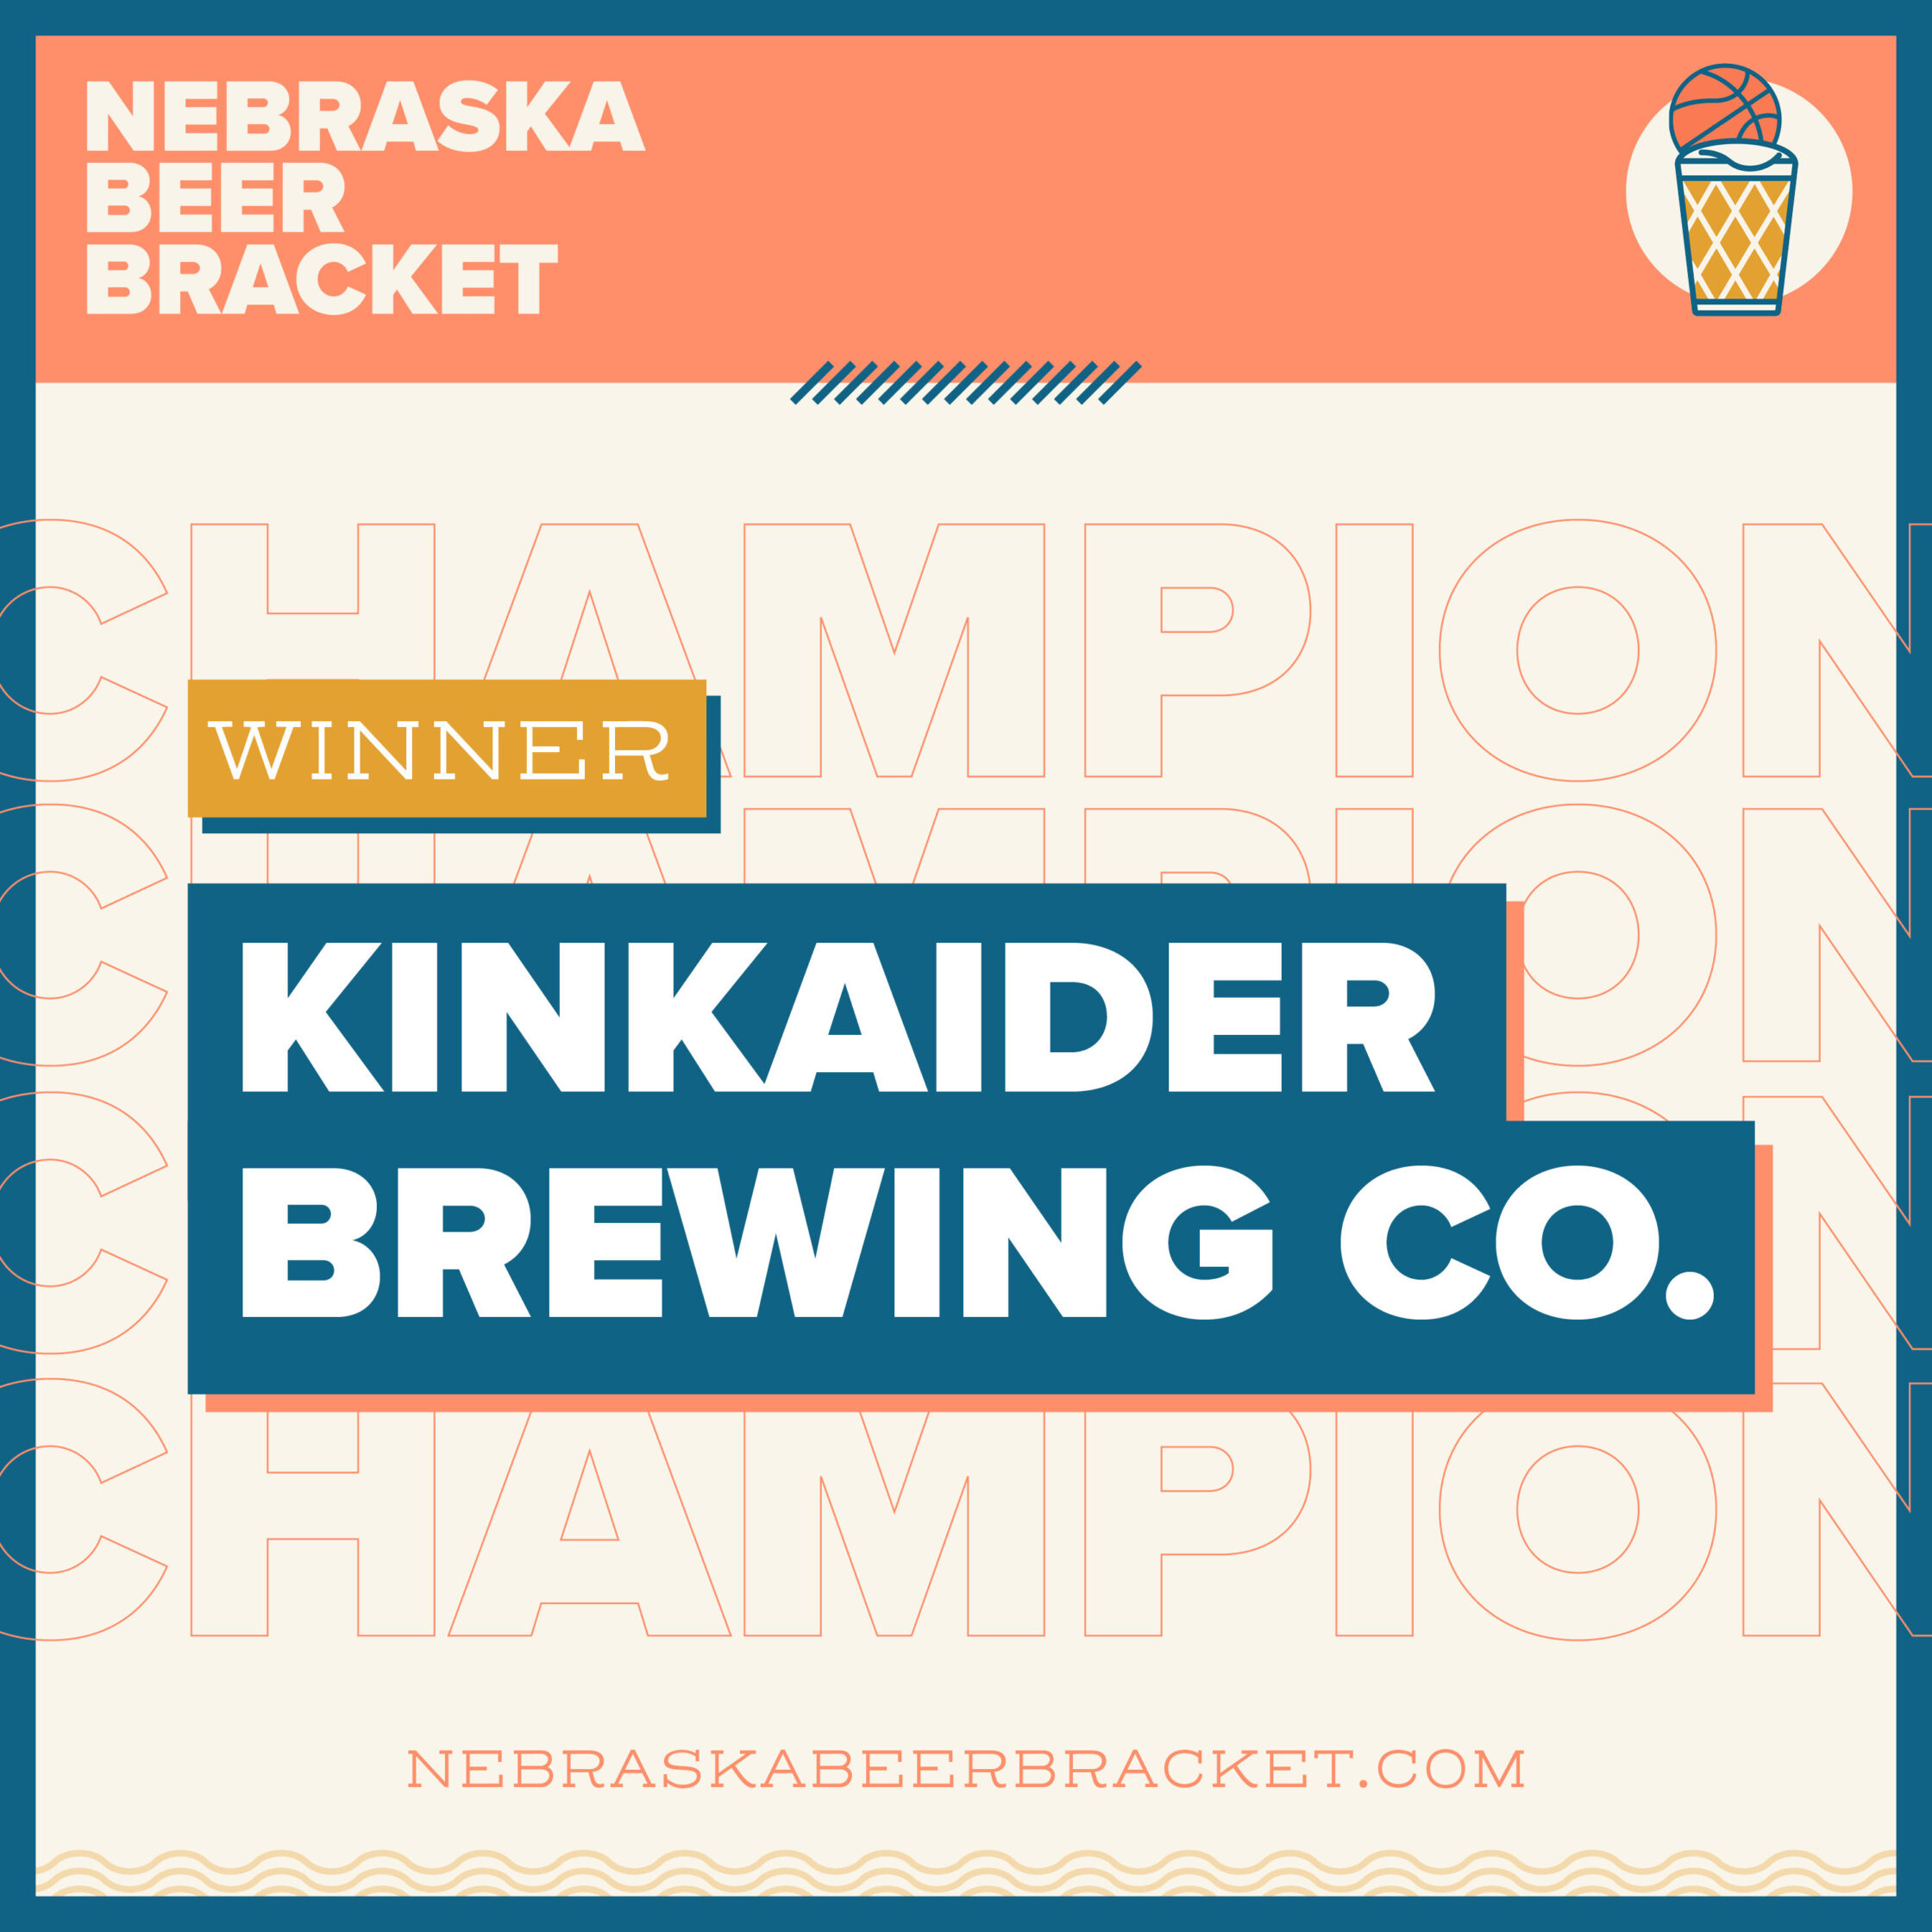 Nebraska Beer Bracket - Champion - Kinkaider Brewing Company